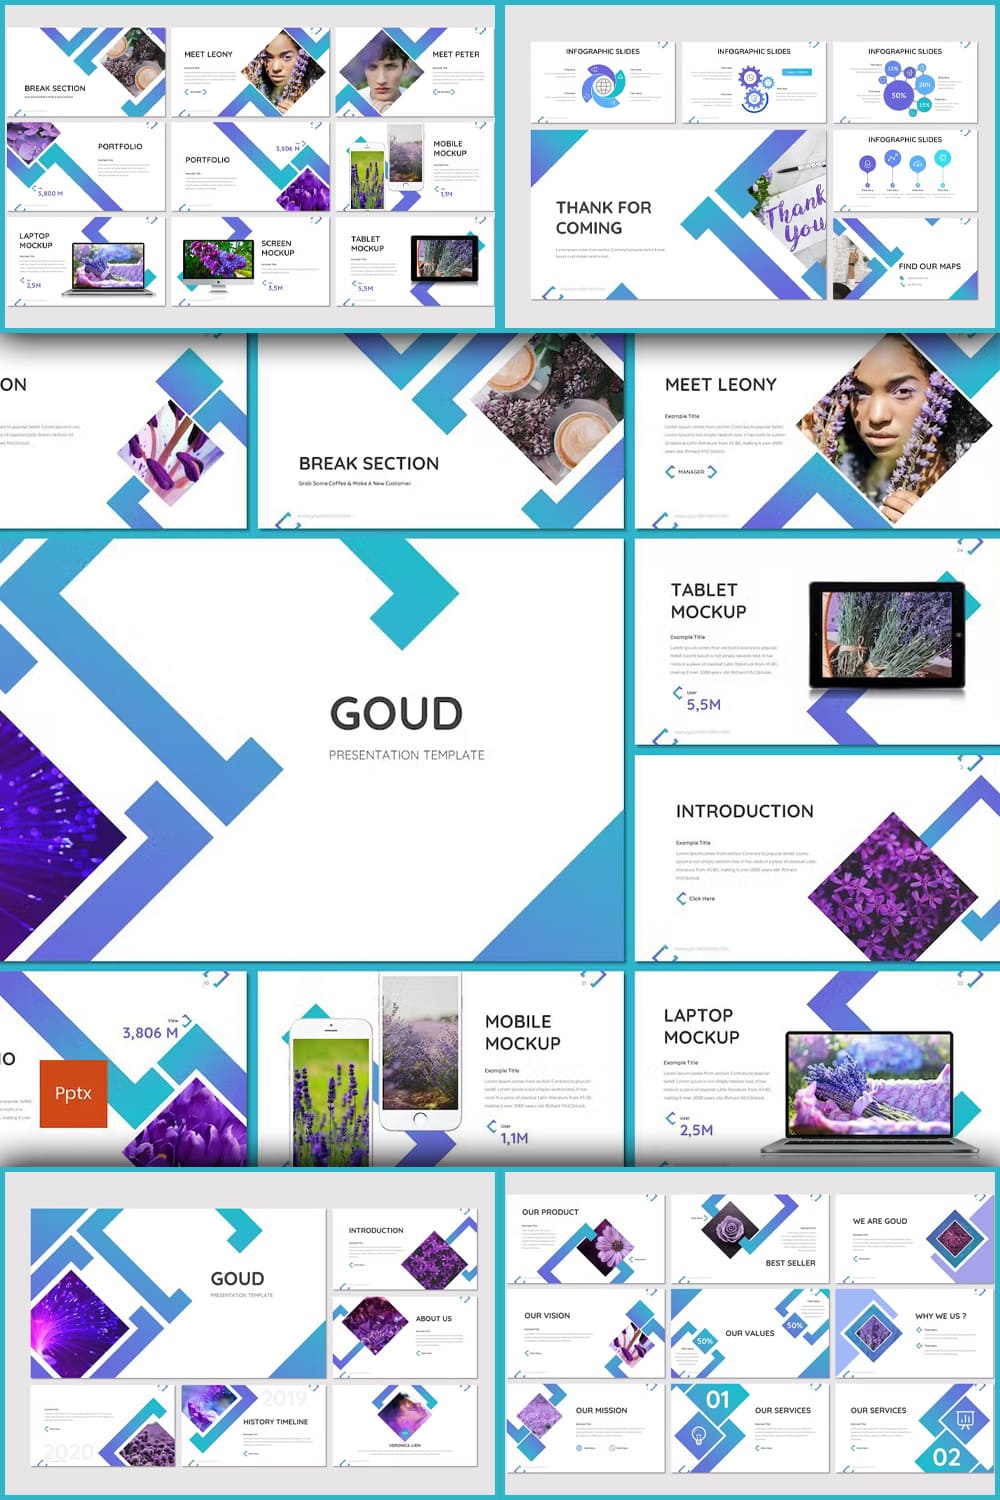 Goud Presentation Template - pinterest image preview.